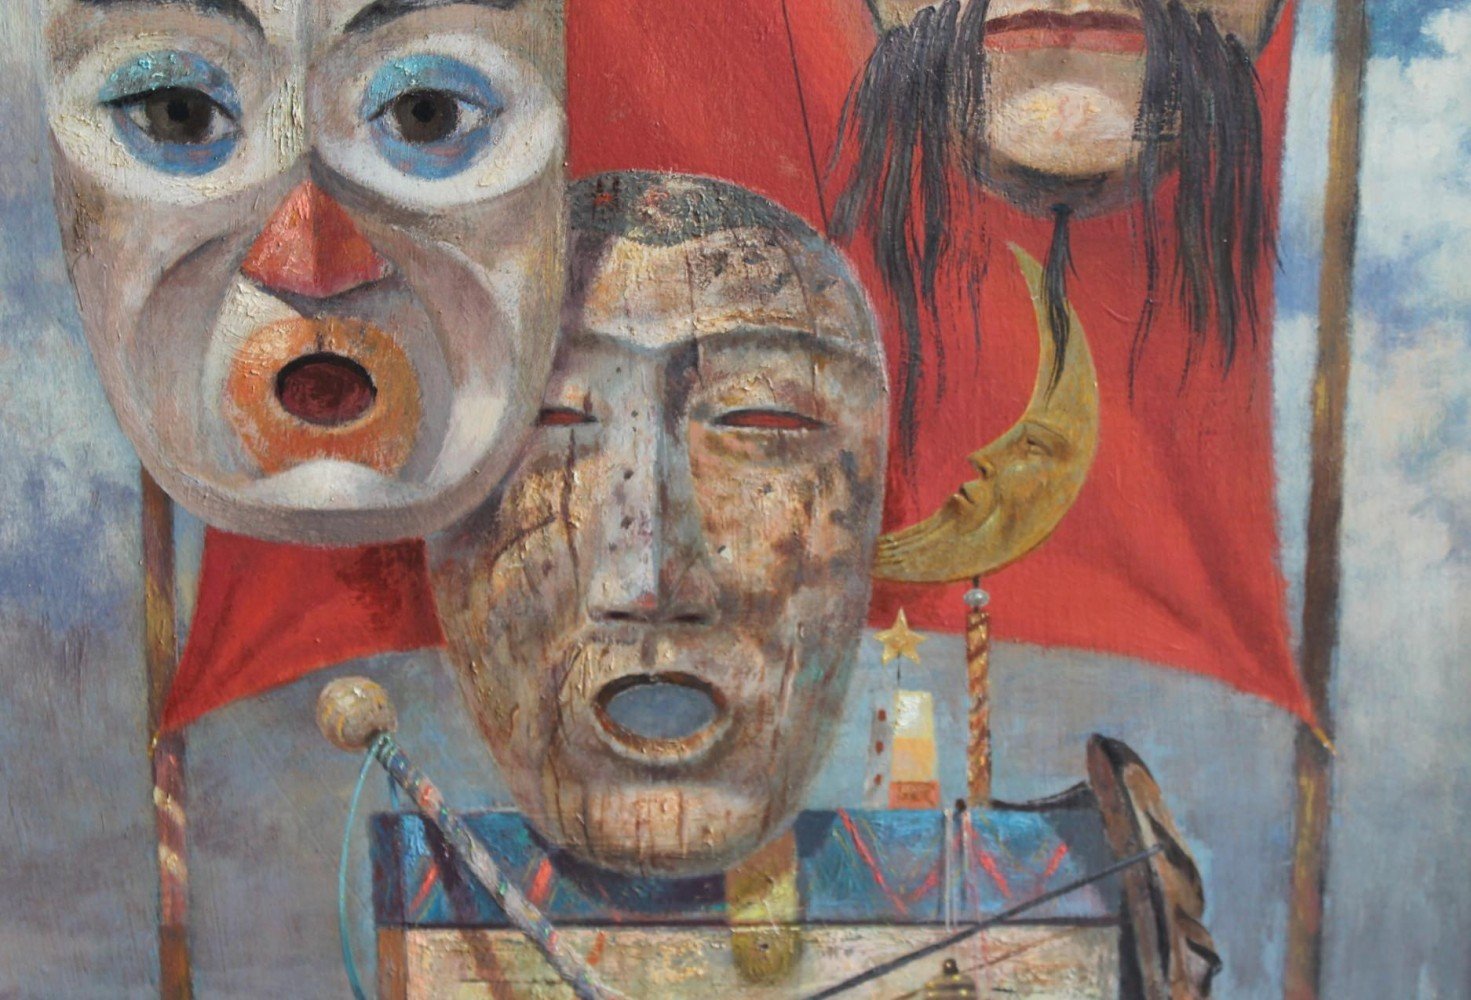 Three Masks by Paul Riba